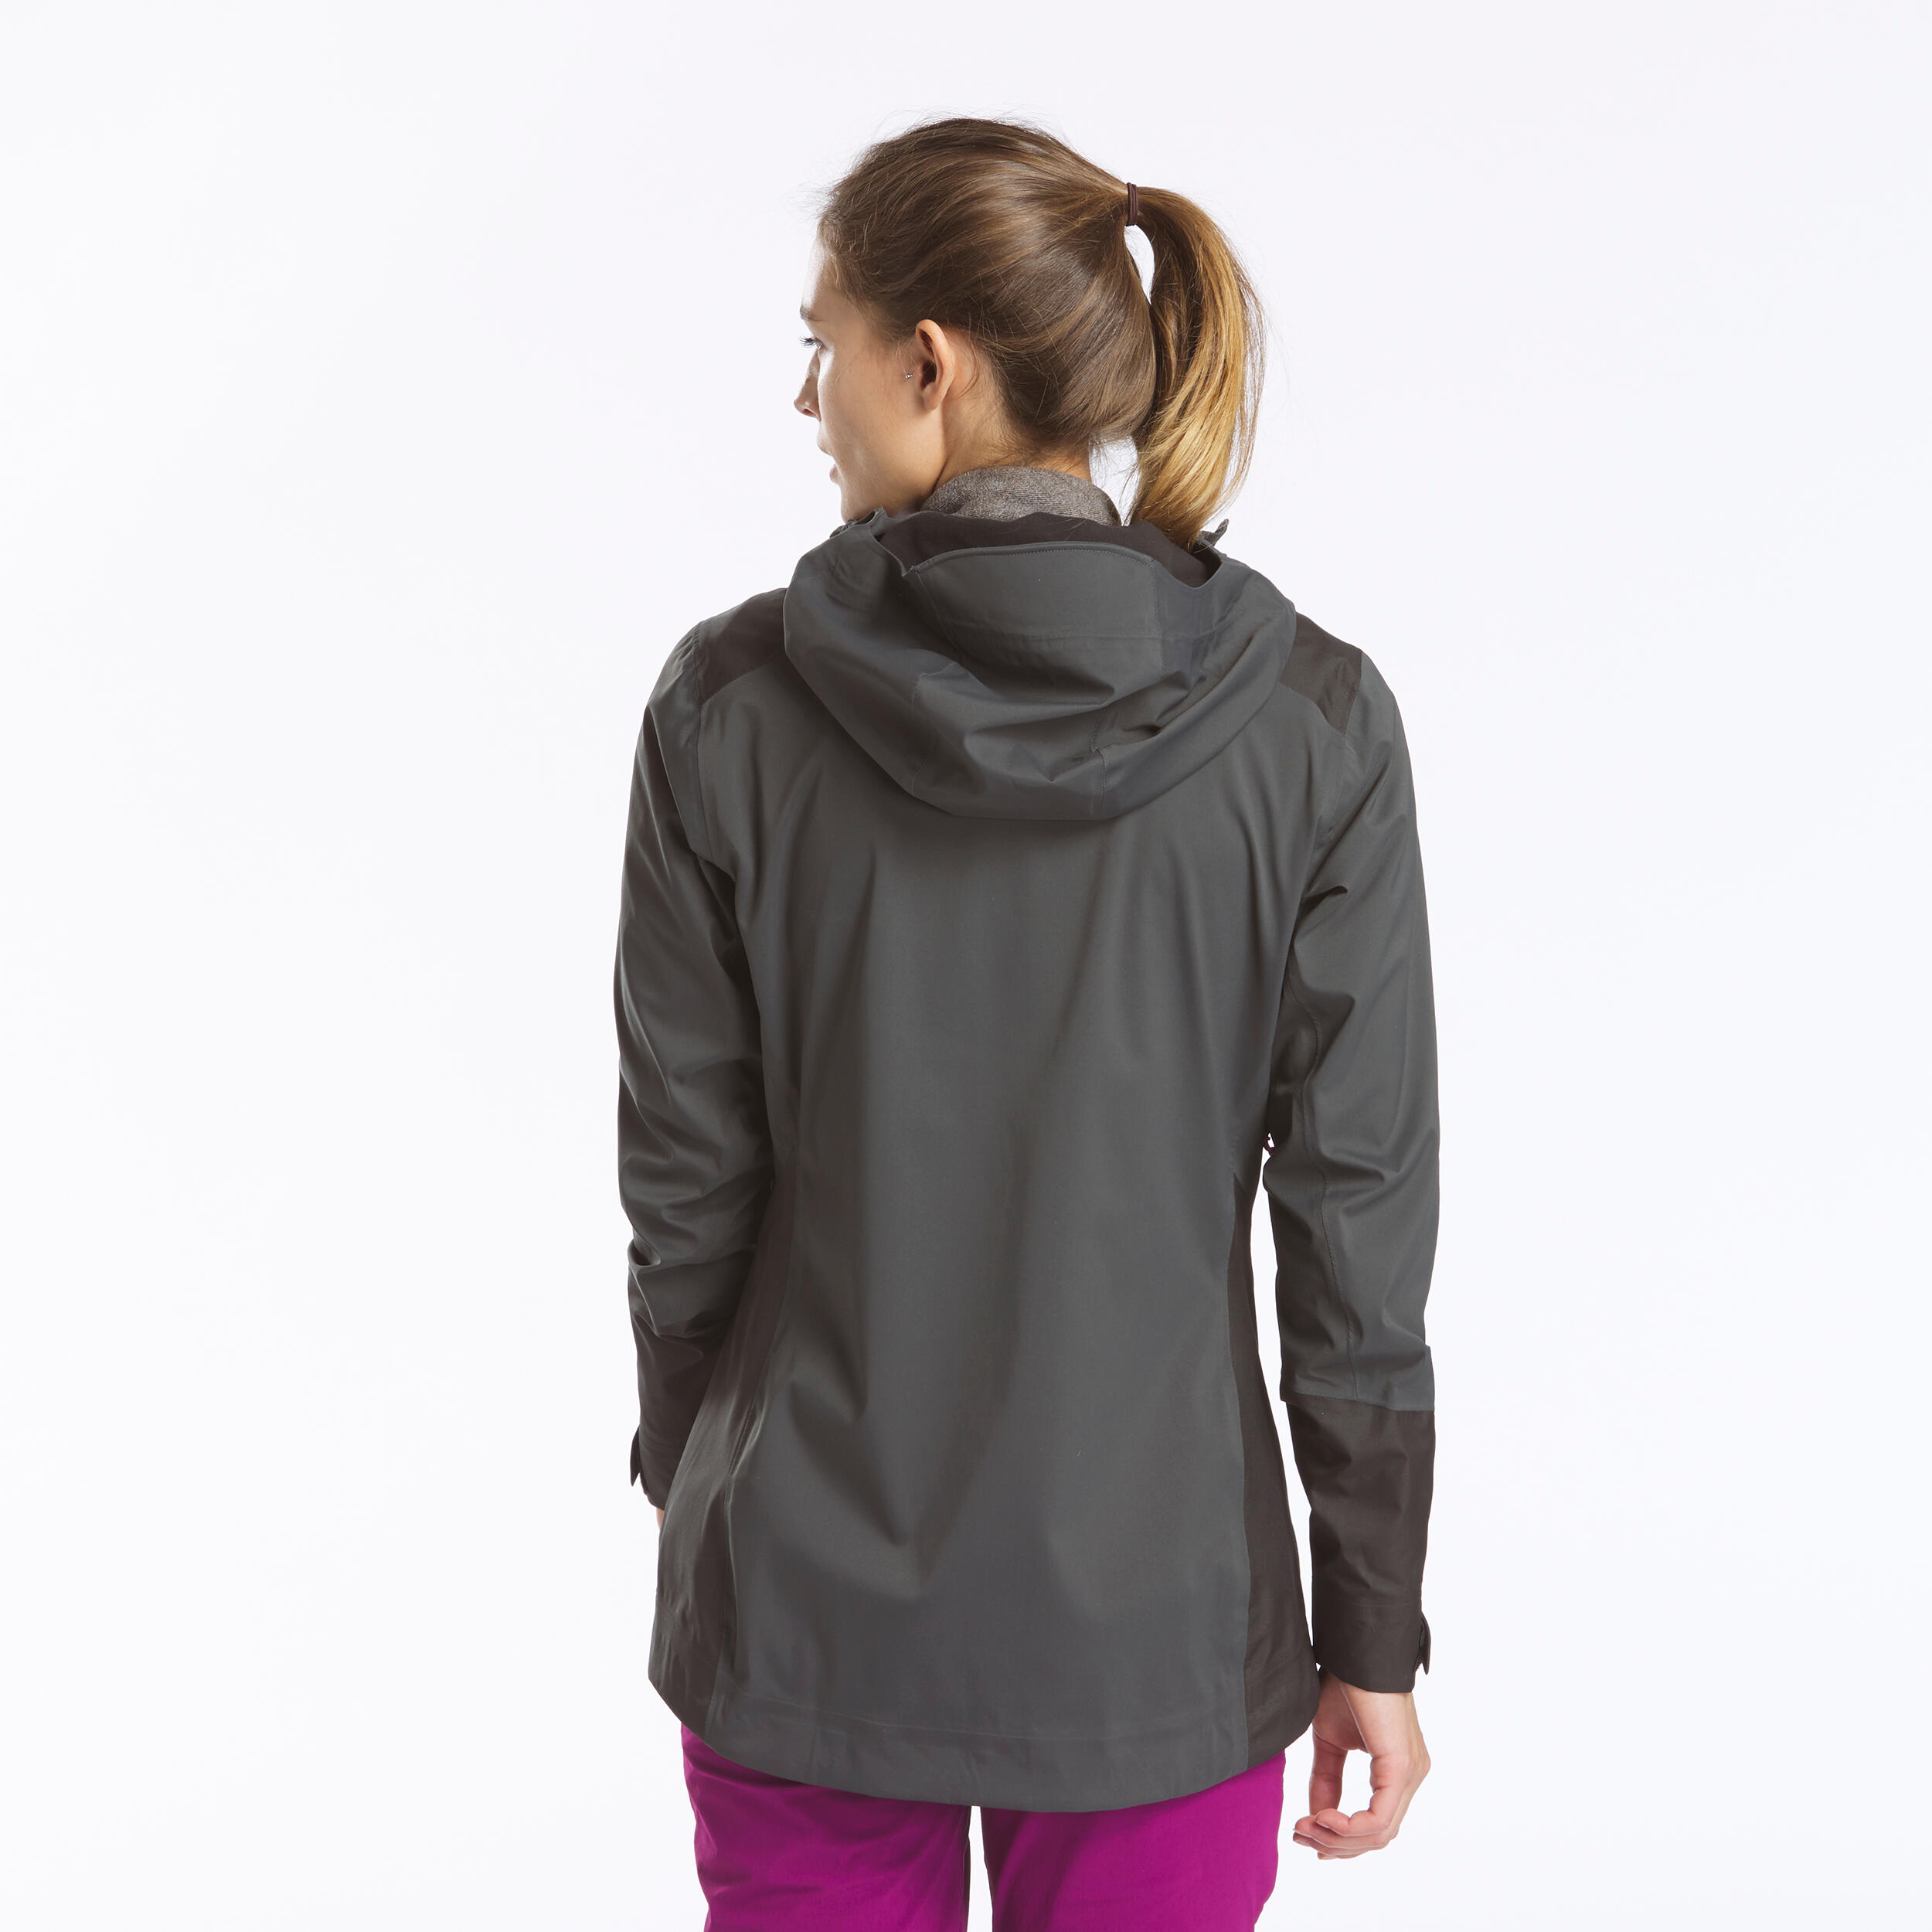 Women's Waterproof Hiking Jacket - MH 900 - Carbon grey, black